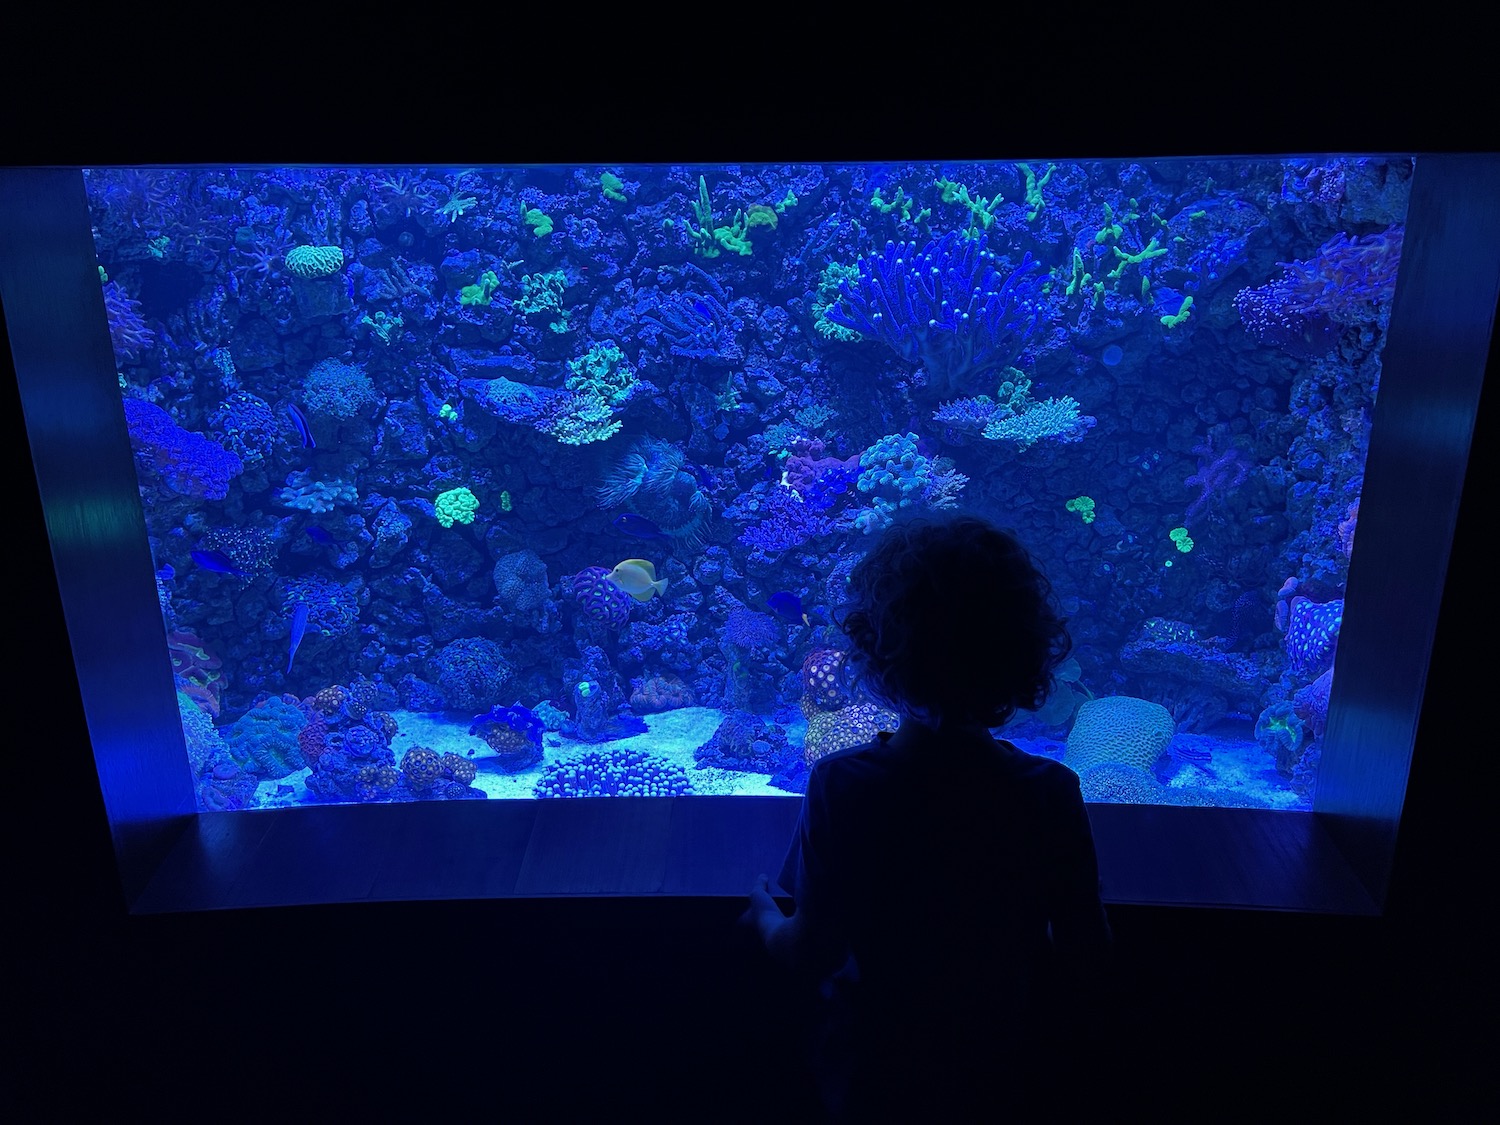 a person looking at a fish tank